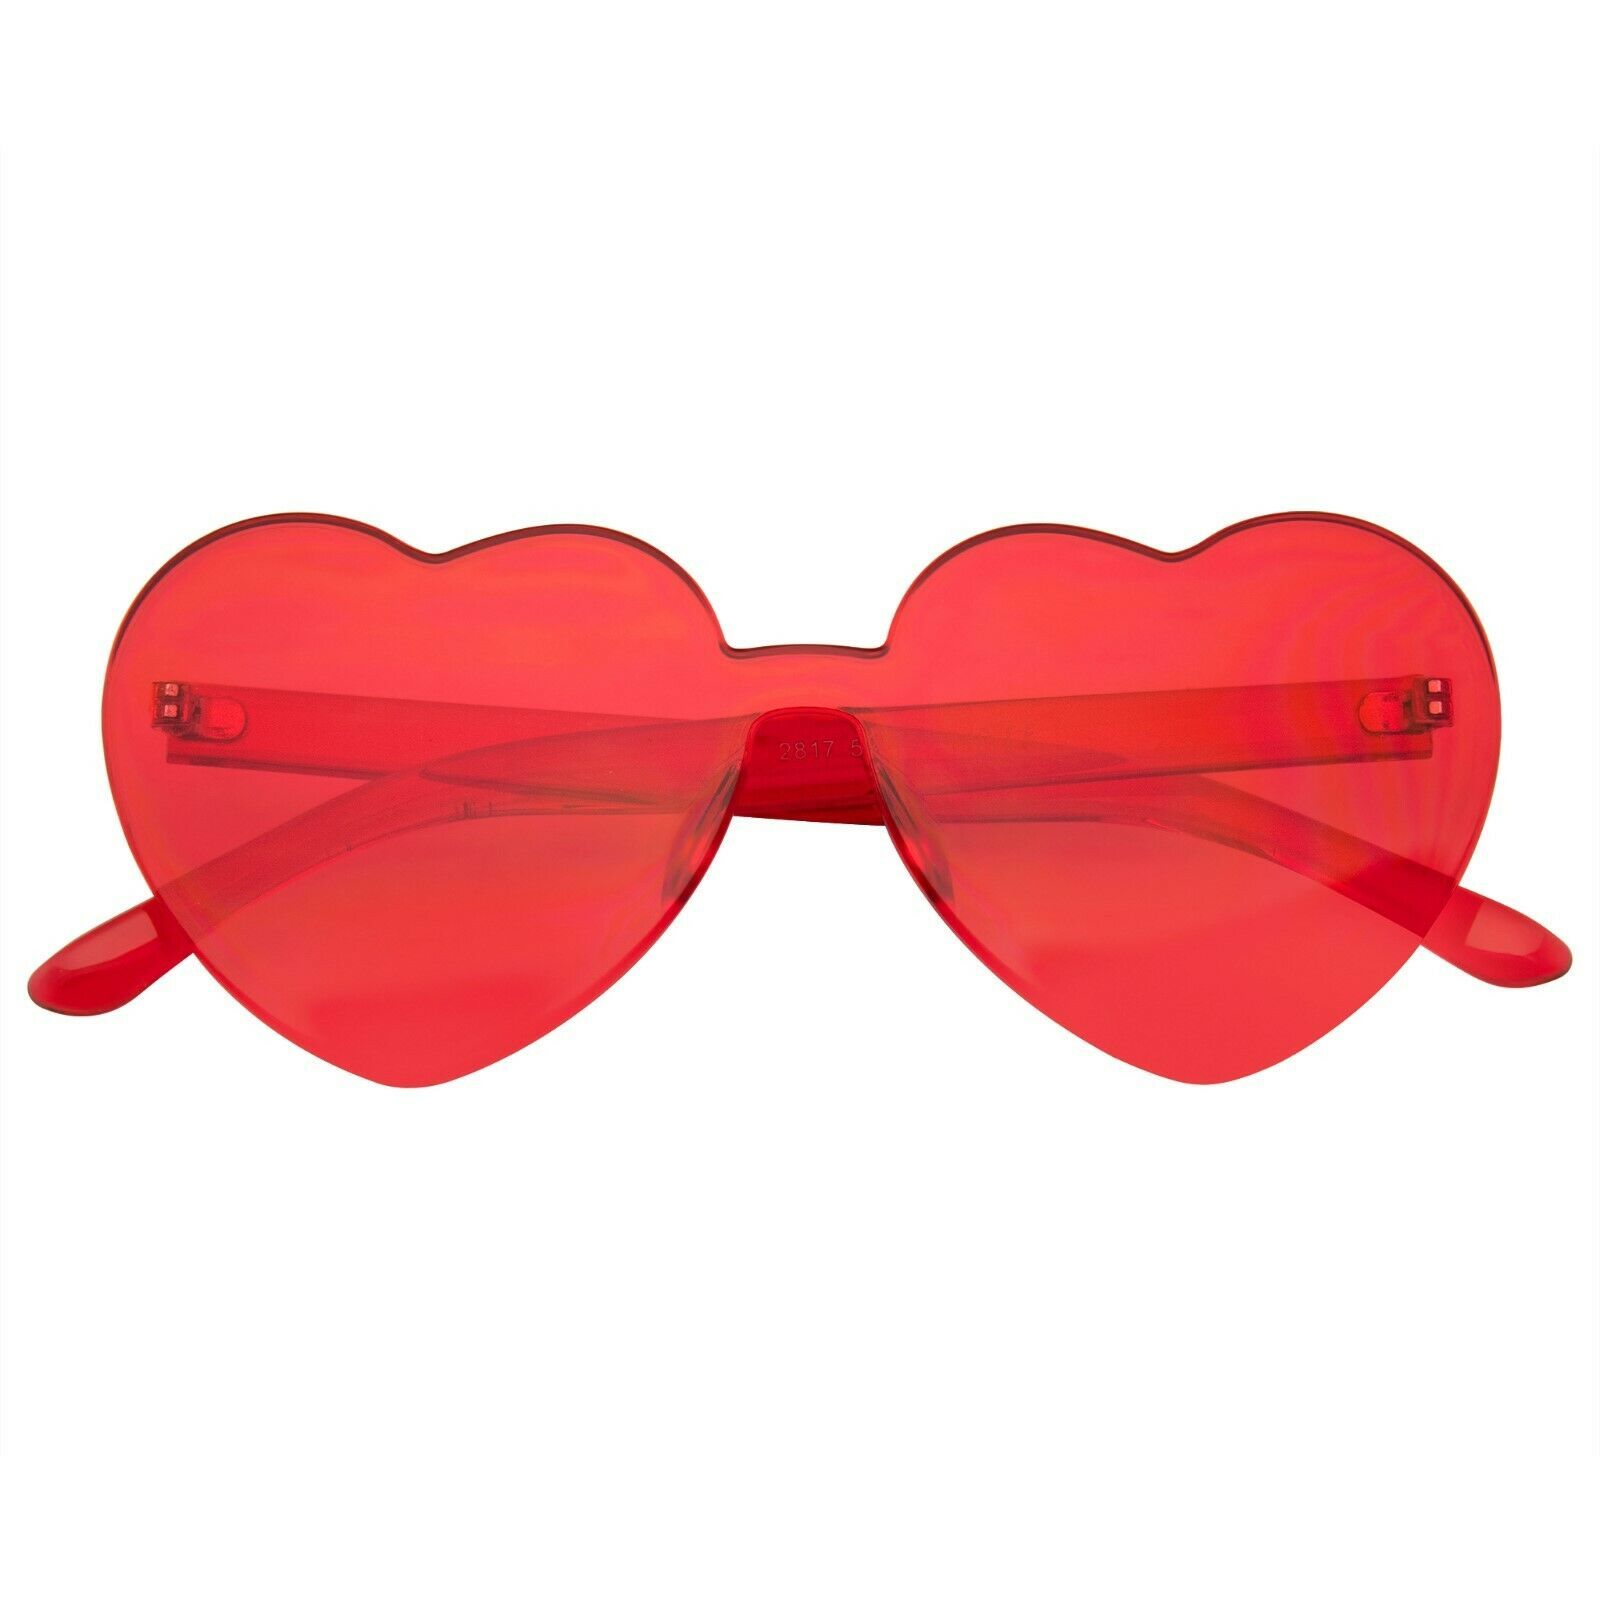 Heart Shape Heart Sunglasses Retro Vintage Boho Translucent Sunglasses Shades